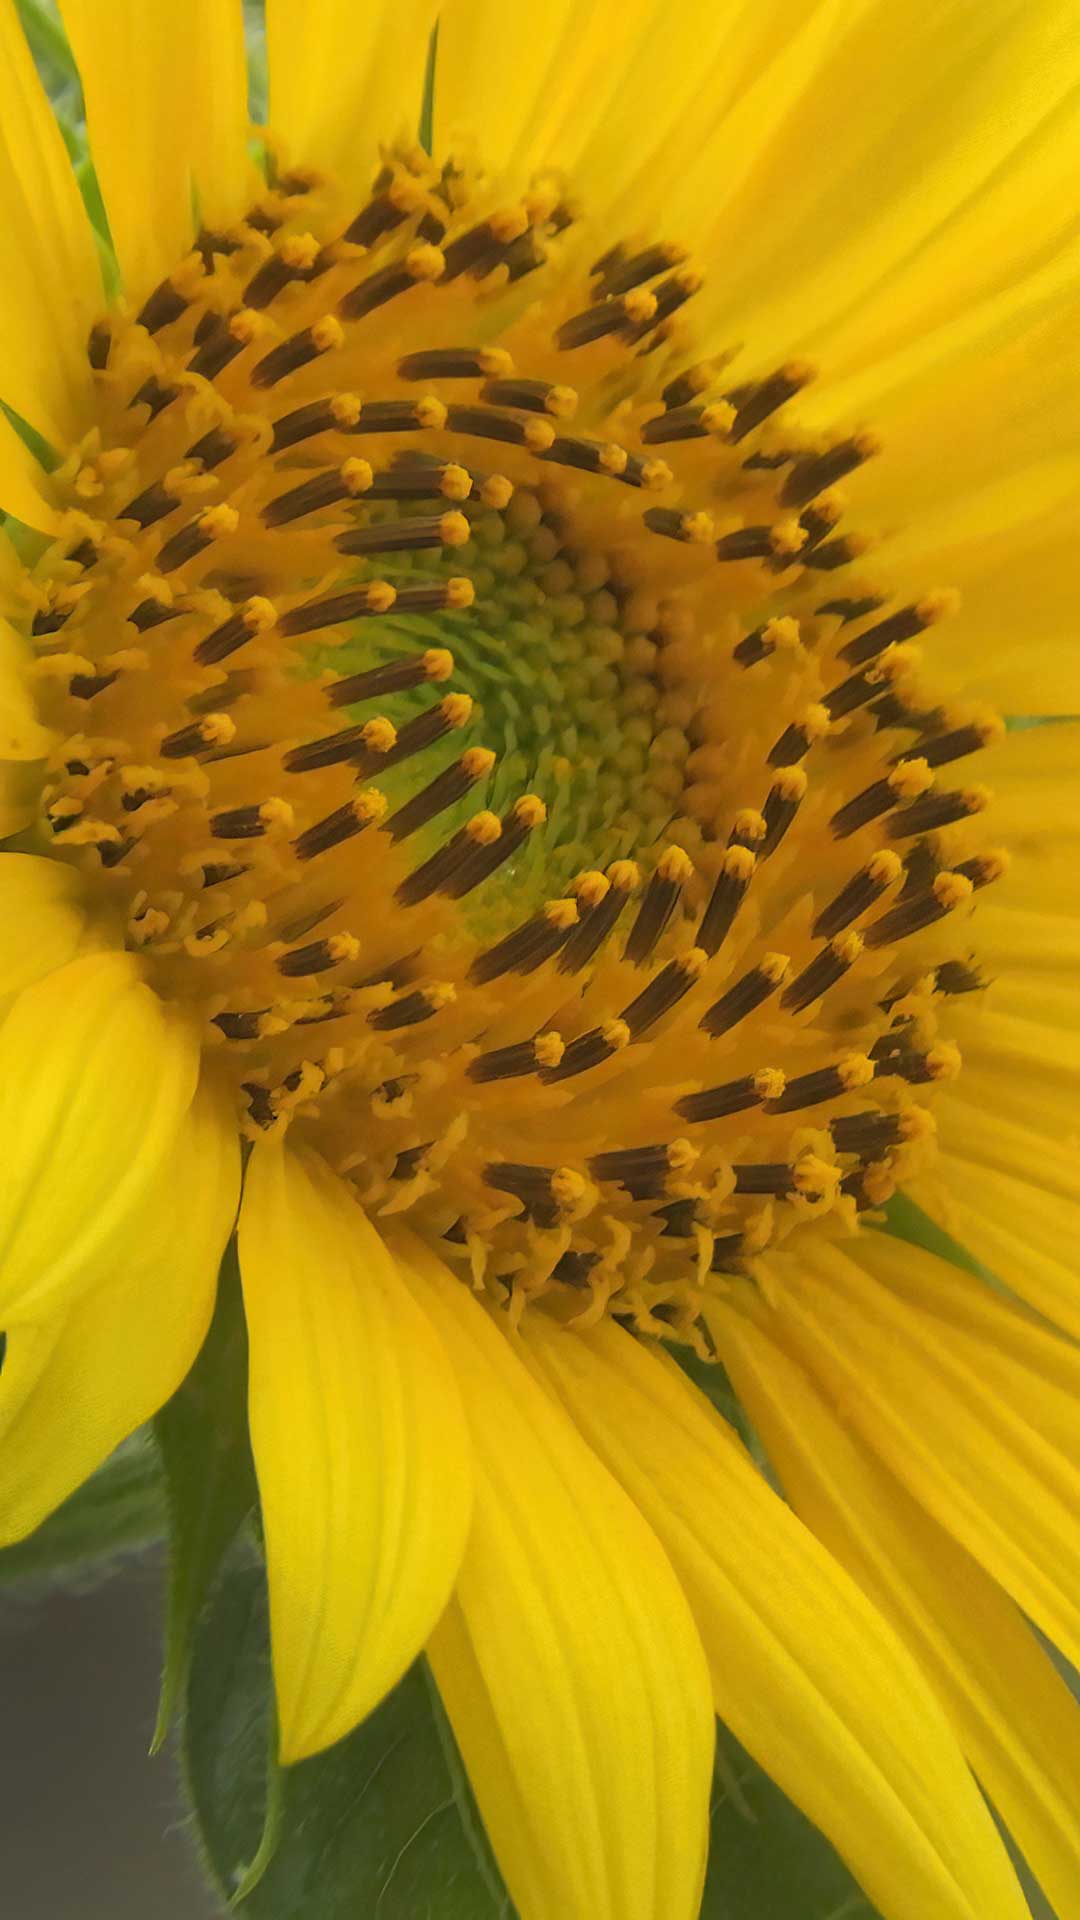 sunflower3